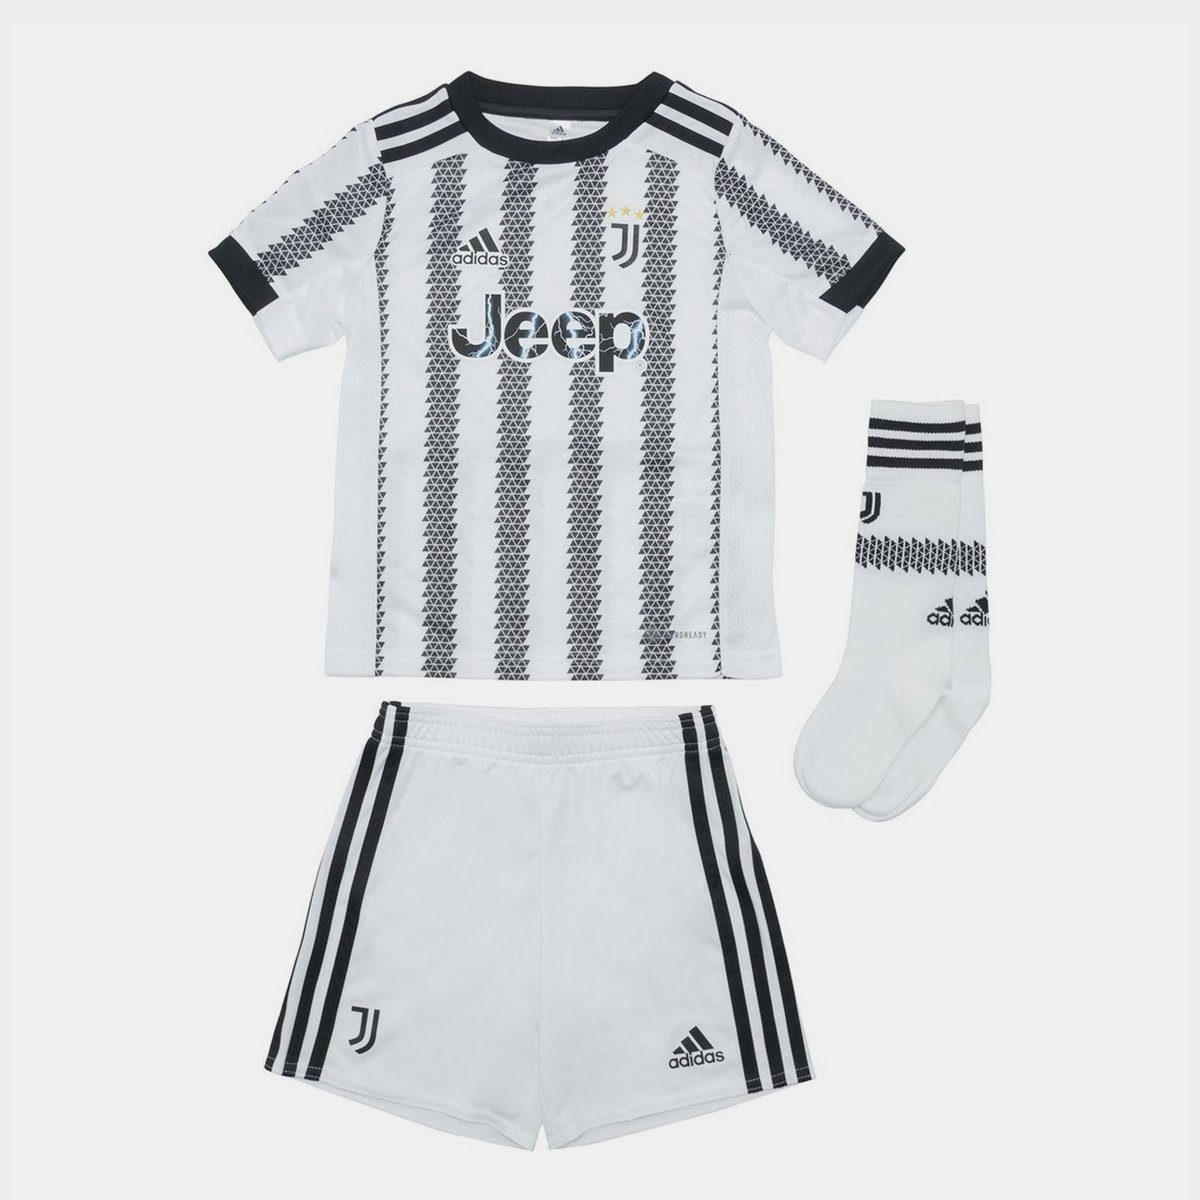 Kids Football Shirts & Kits - Lovell Soccer